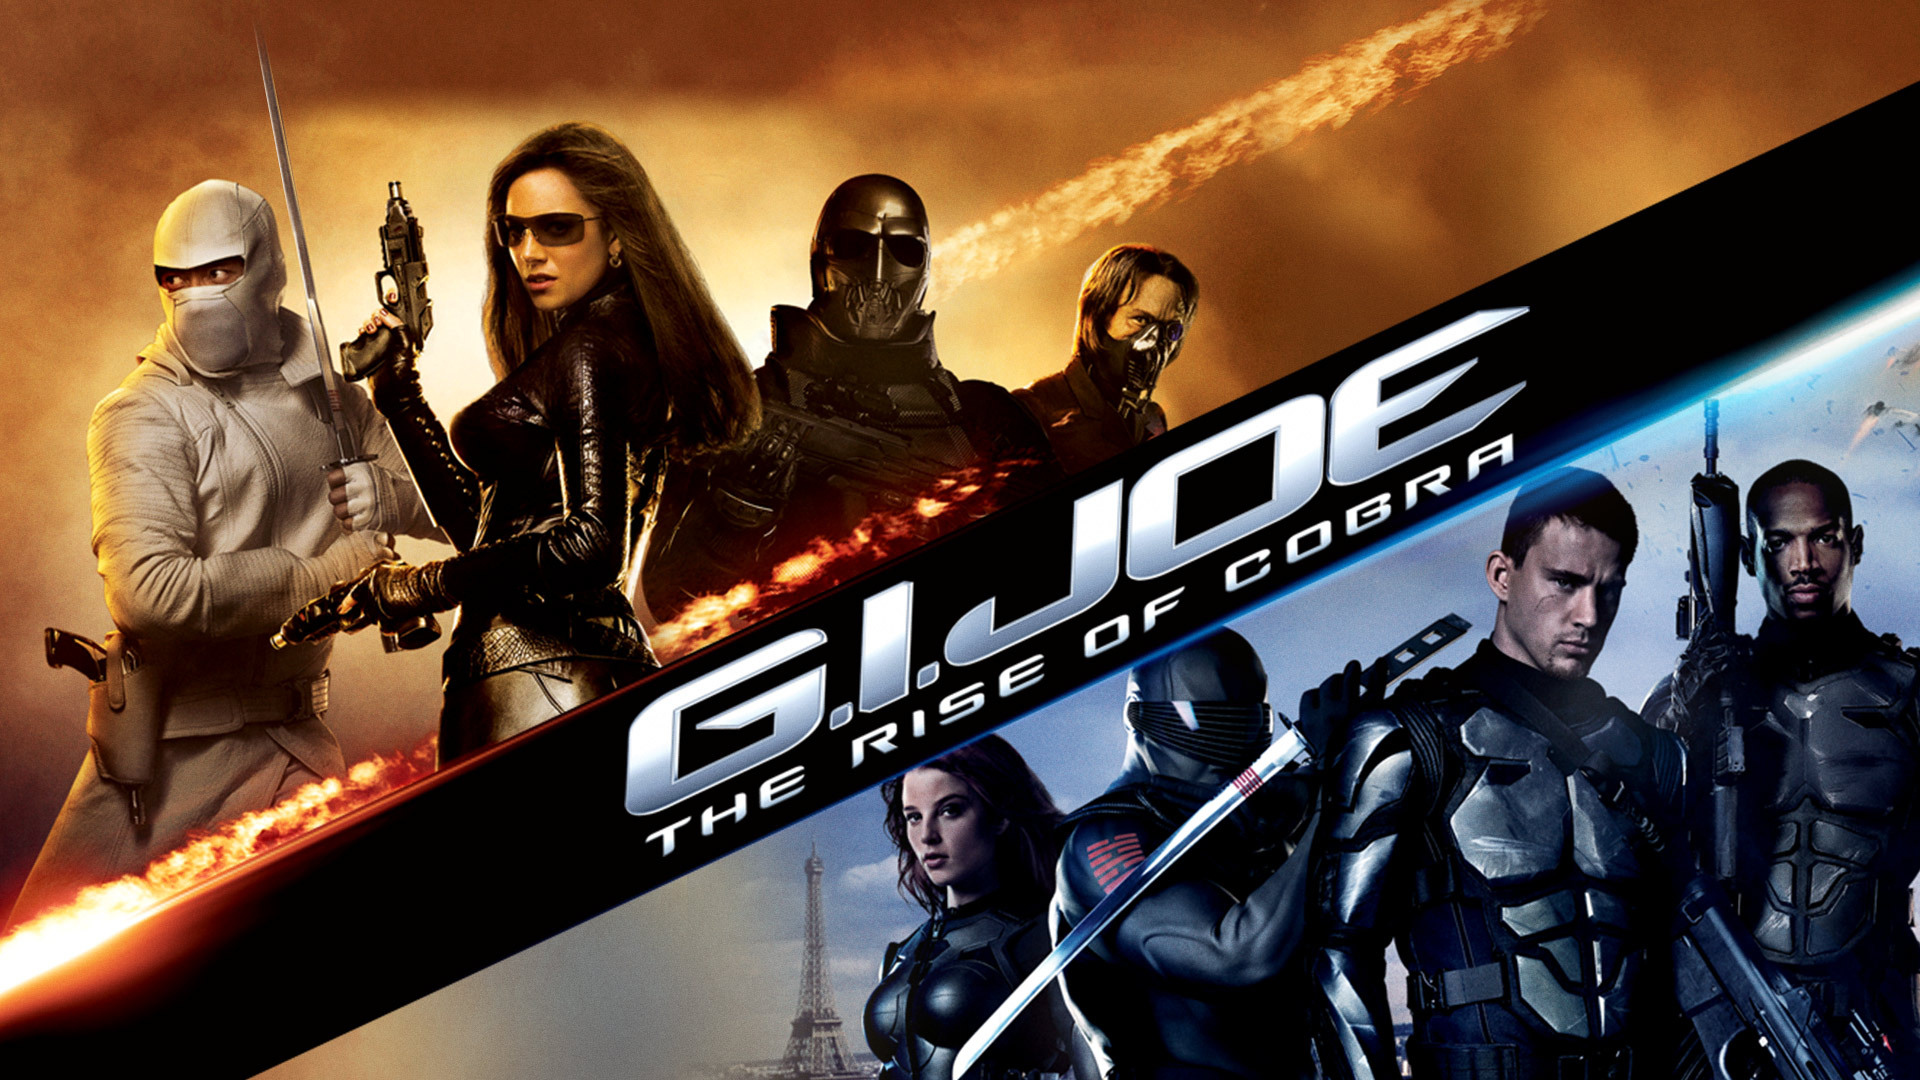 G.I. Joe: The Rise of Cobra - Watch Full Movie on Paramount Plus